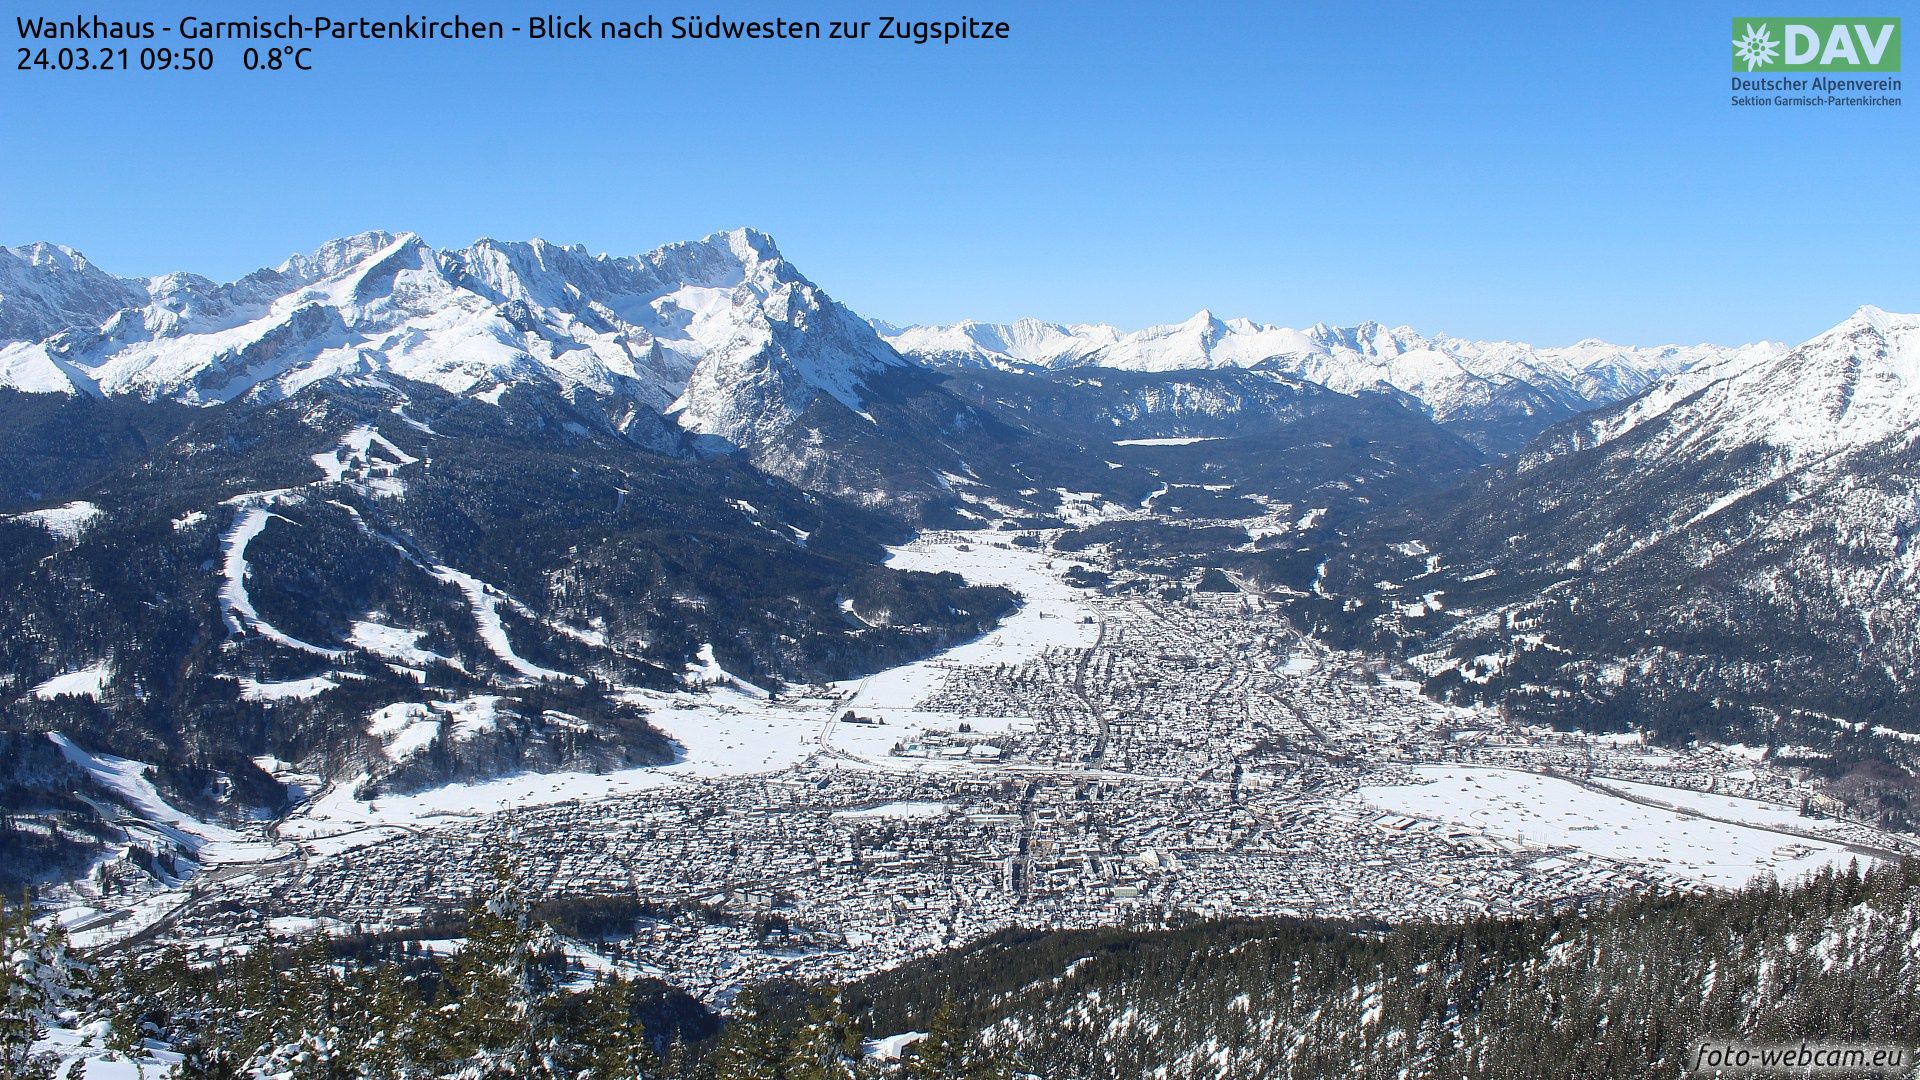 Deep winter conditions in Garmisch (foto-webcam.eu)